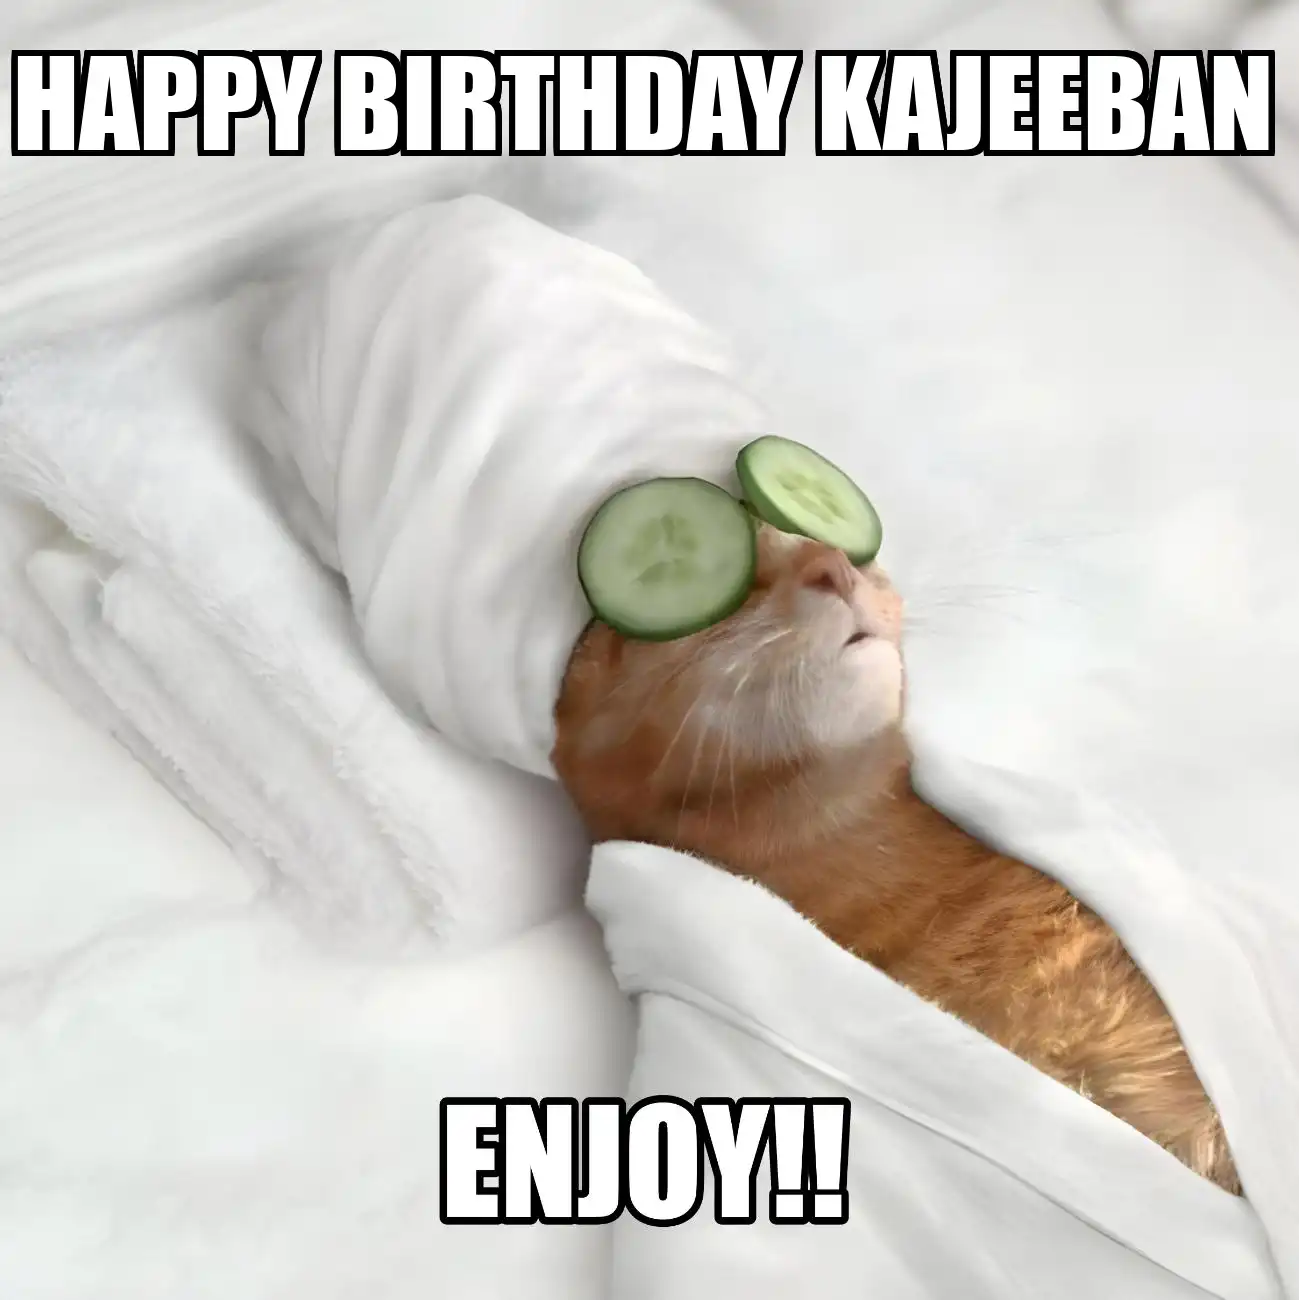 Happy Birthday Kajeeban Enjoy Cat Meme